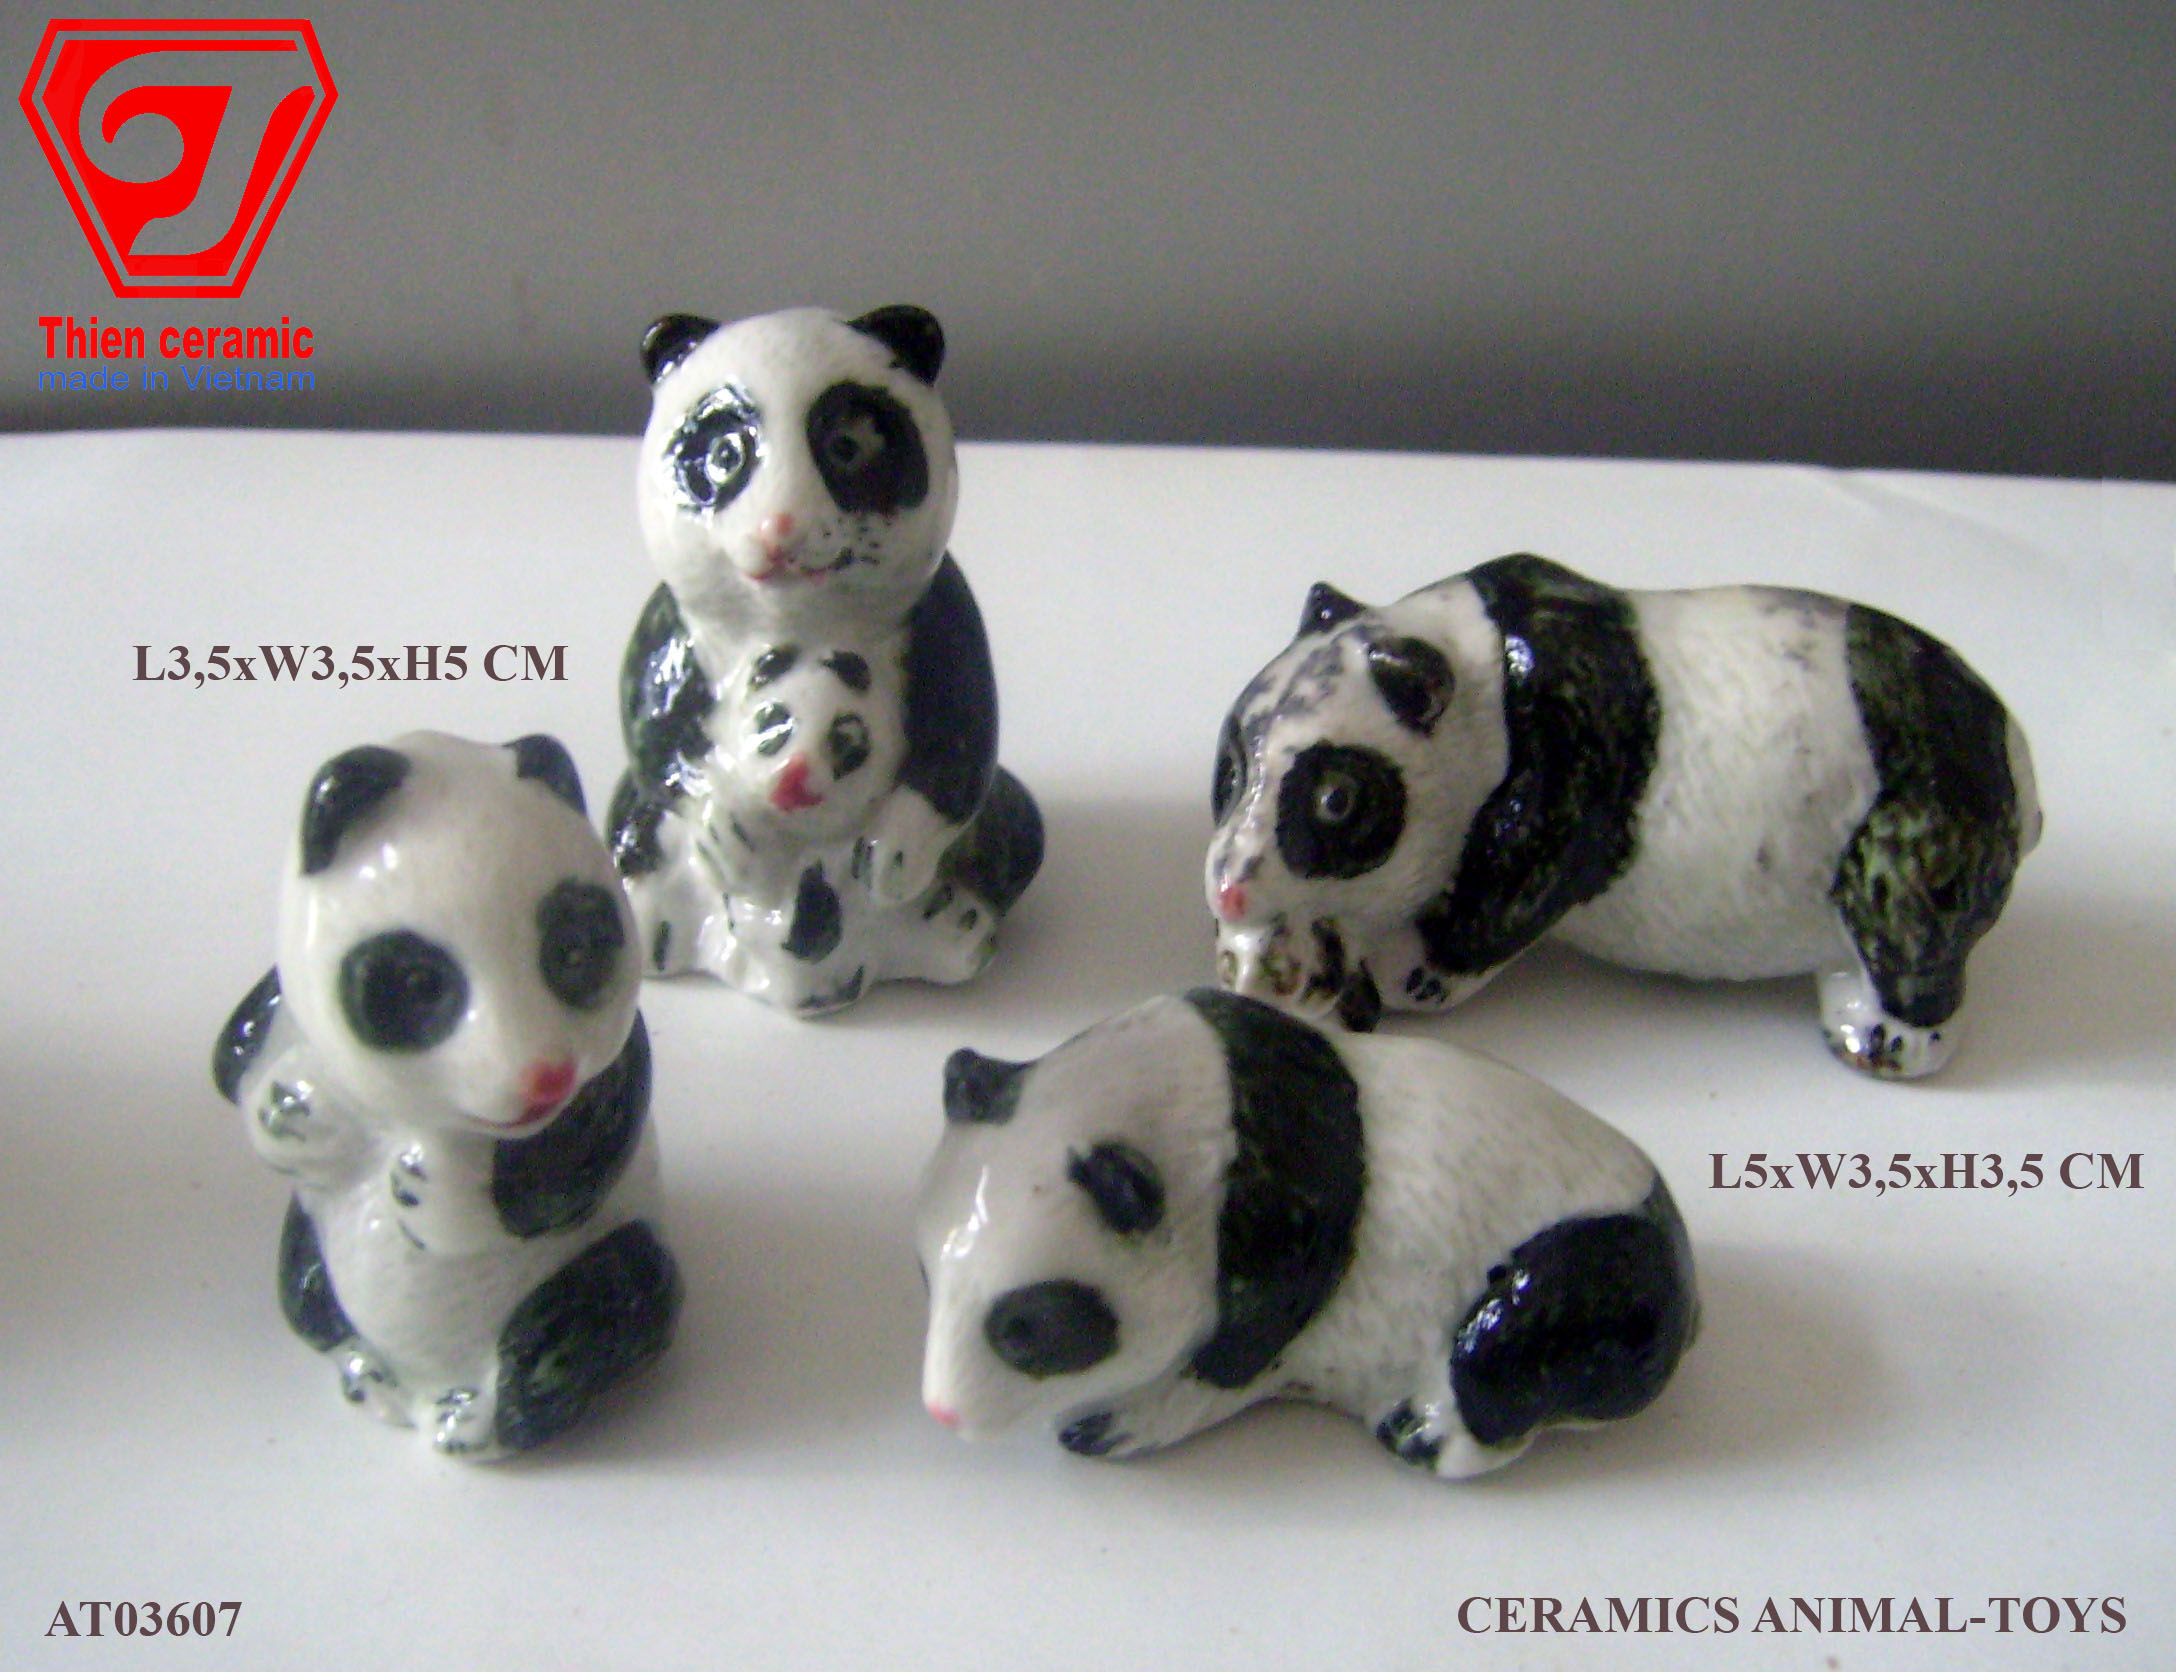 Ceramics Animal Toys